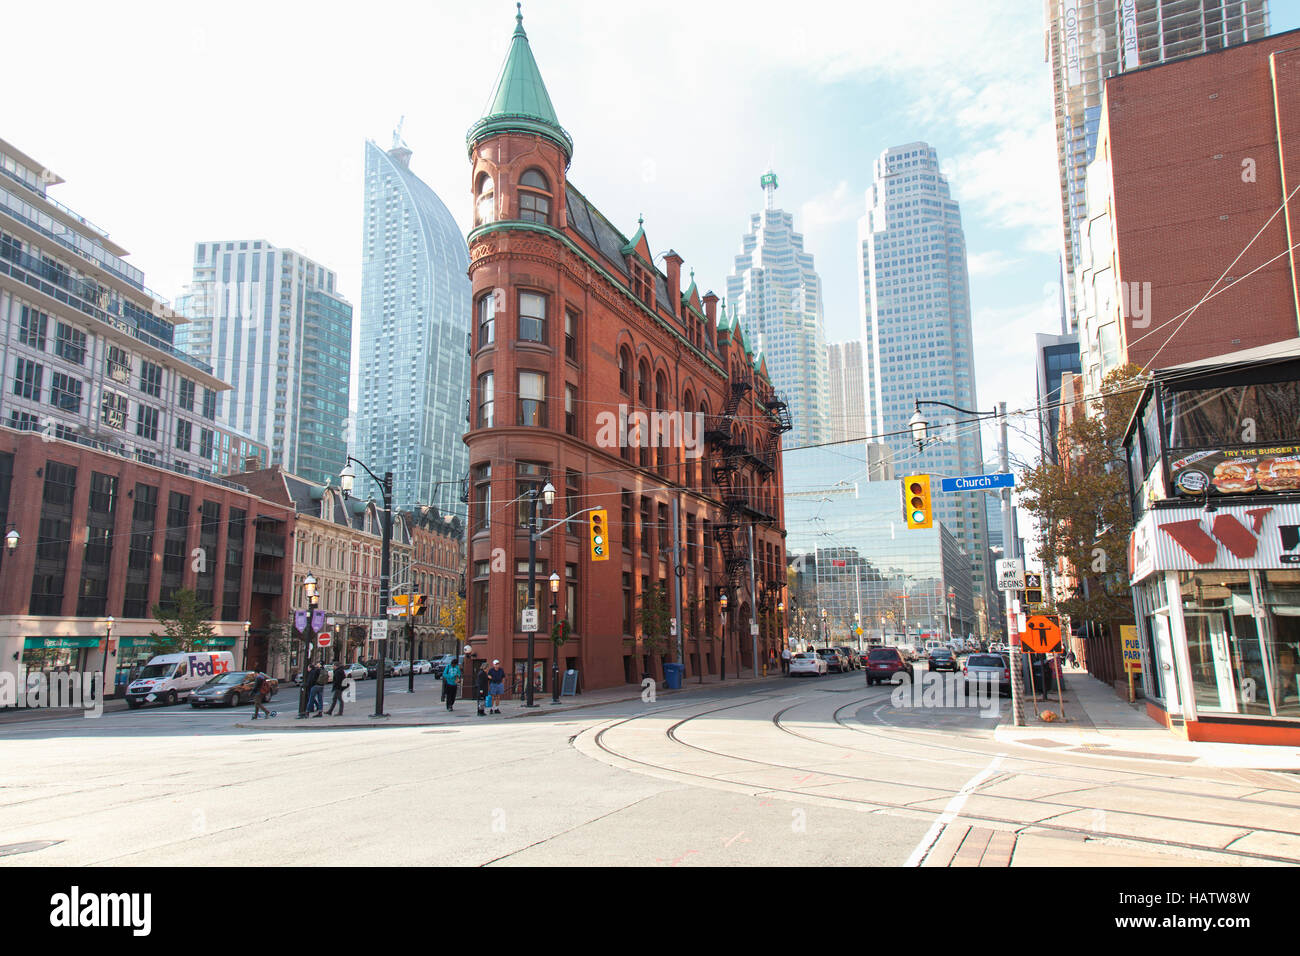 TORONTO - NOVEMBER 18, 2016: The red-brick Gooderham Building is a historic landmark of Toronto, Ontario, Canada located at 49 Wellington Street East. Stock Photo